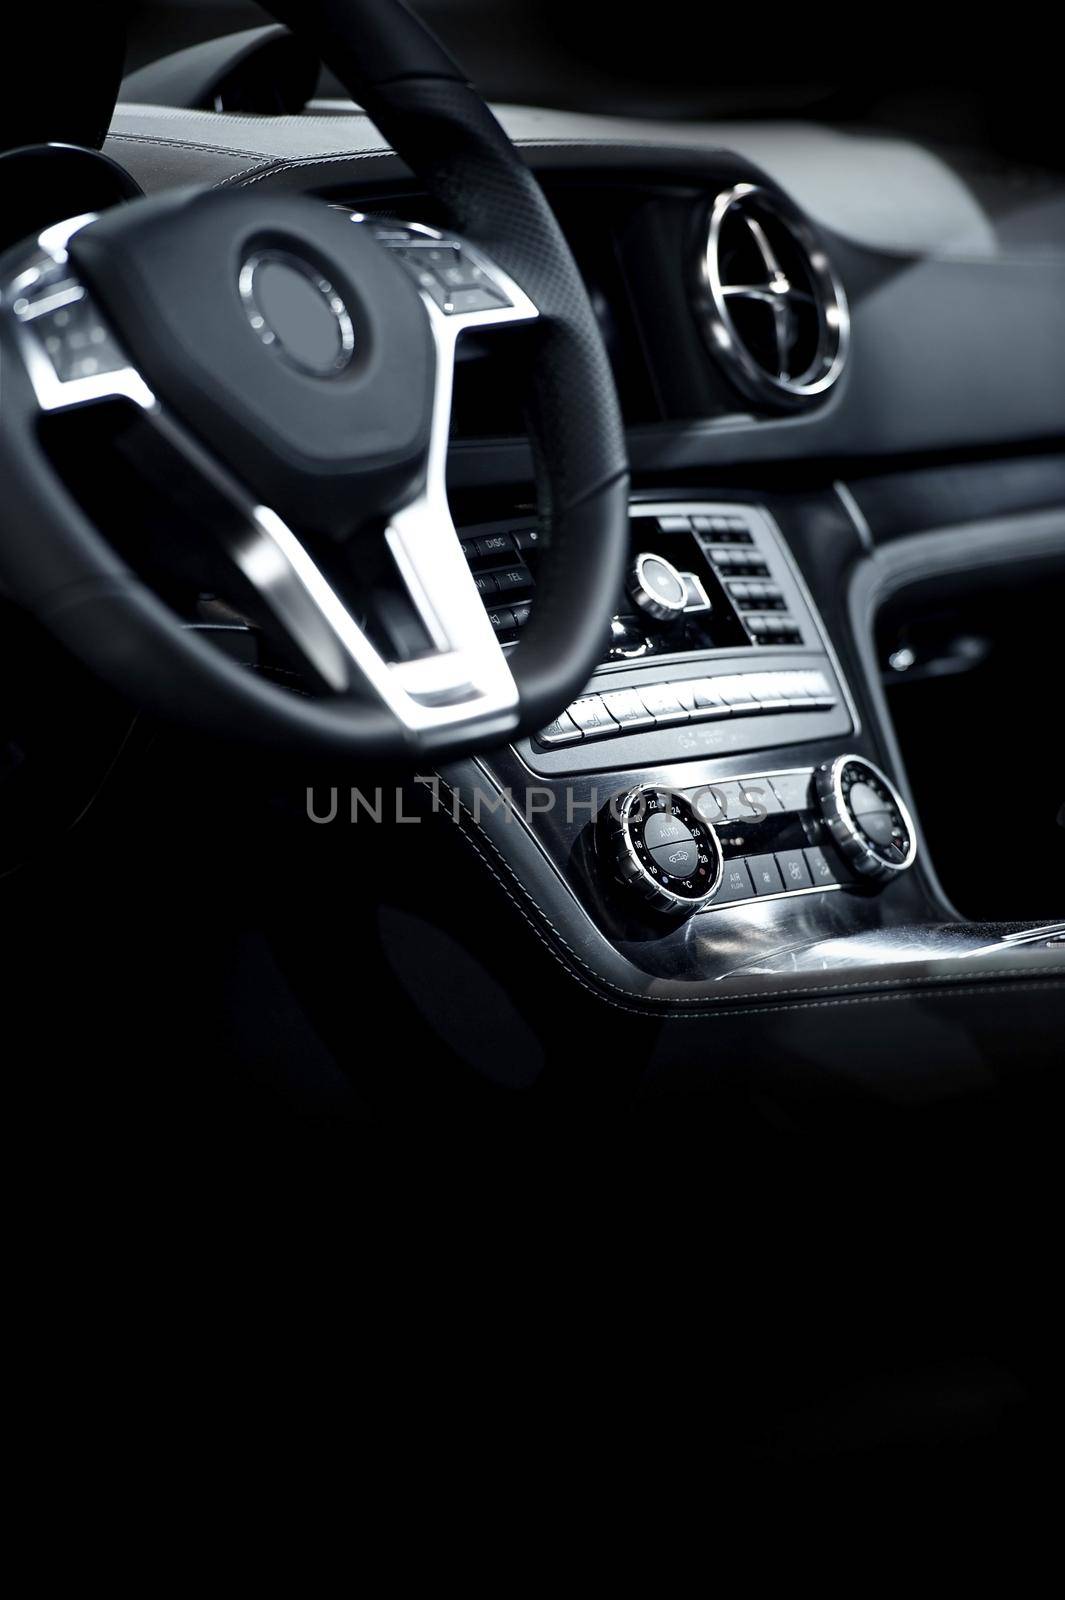 Elegant Modern Car Interior -Dark Leather Interior of Luxury Sport Vehicle. Vertical Photography